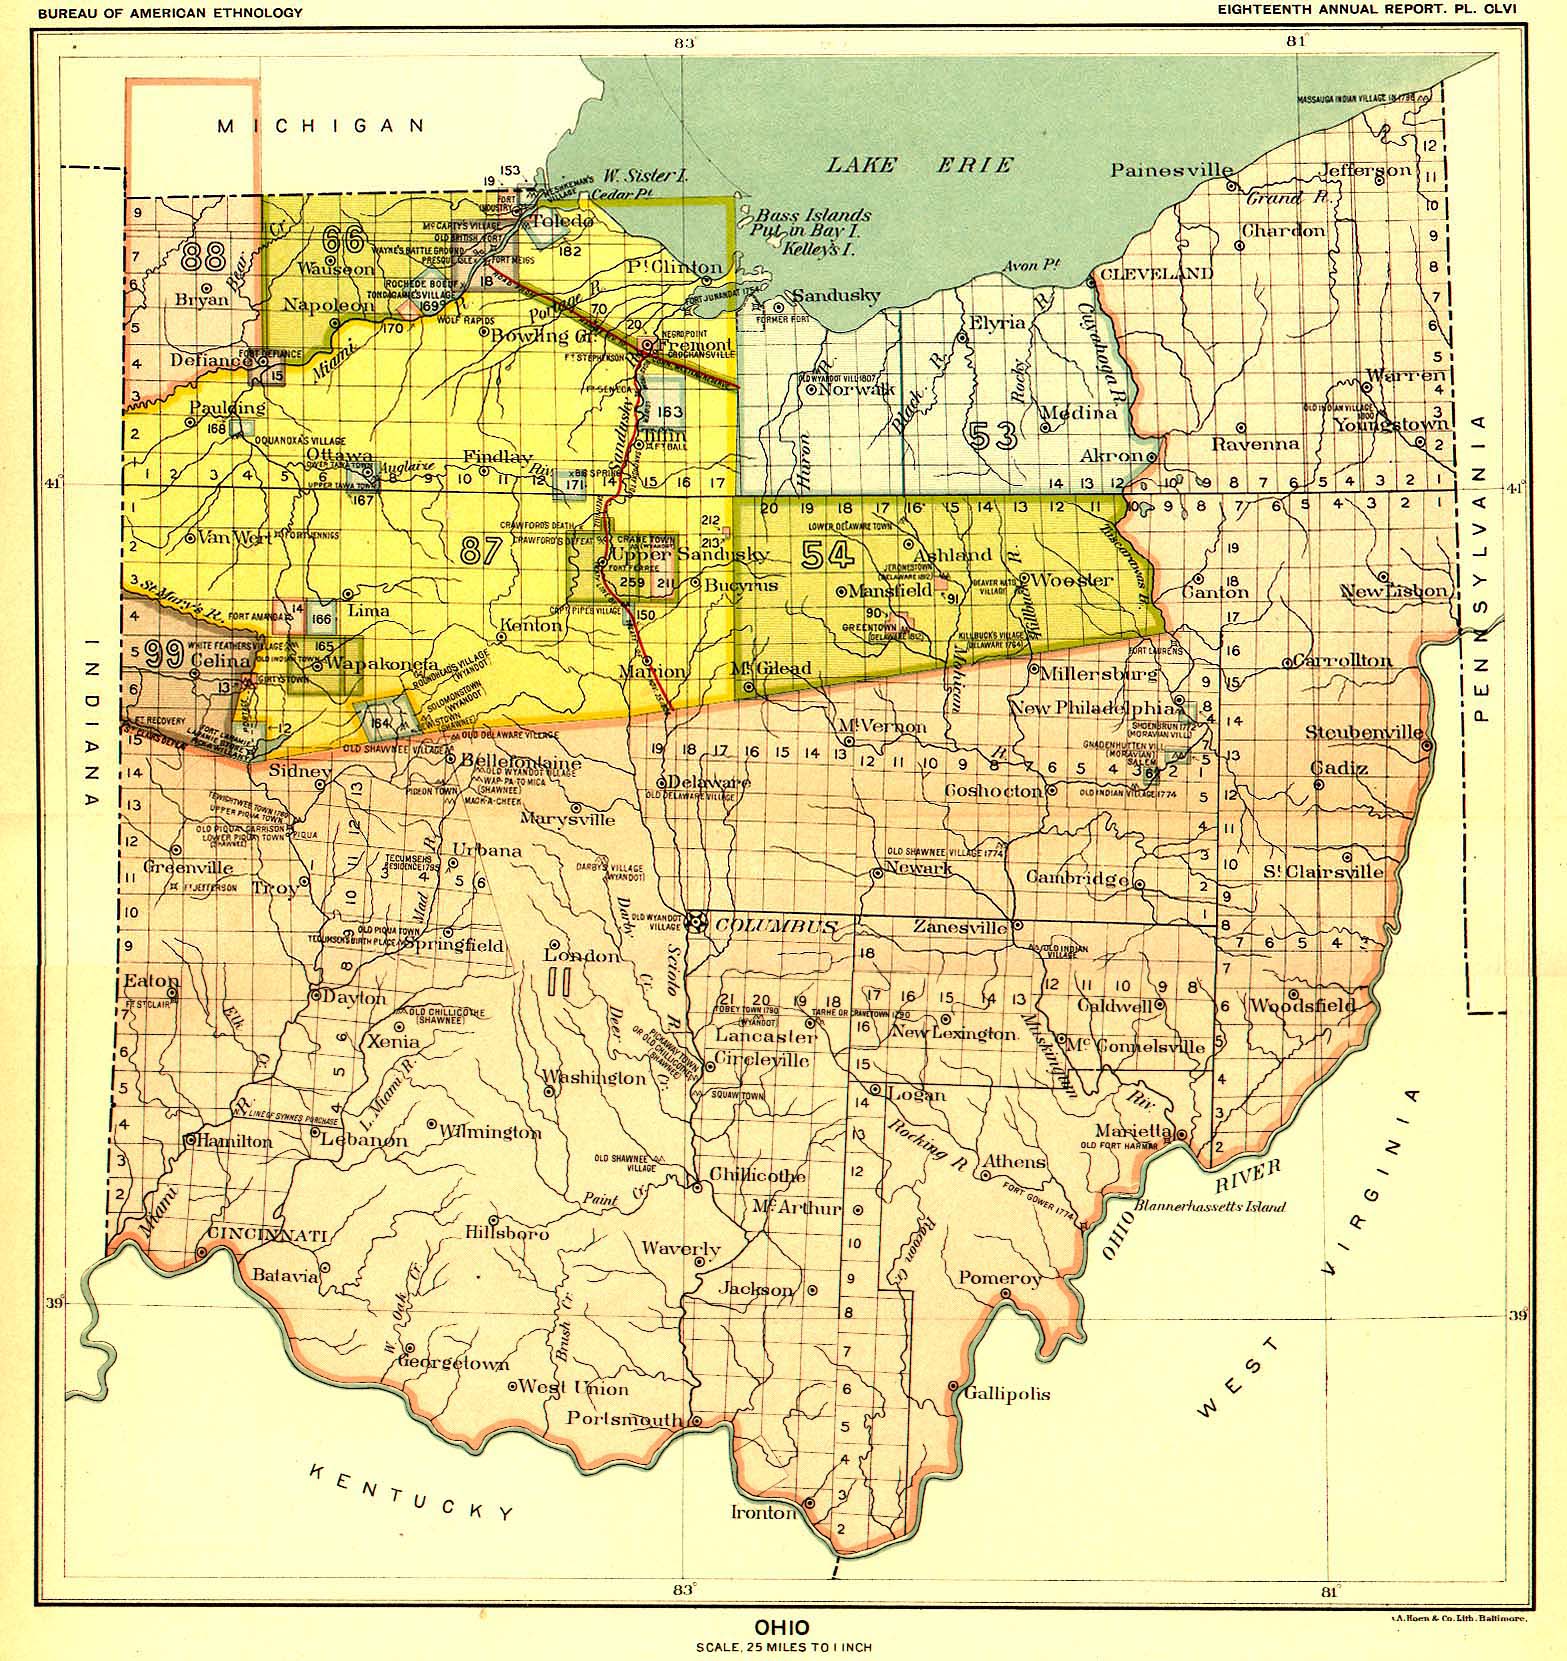 Ohio, Map 49